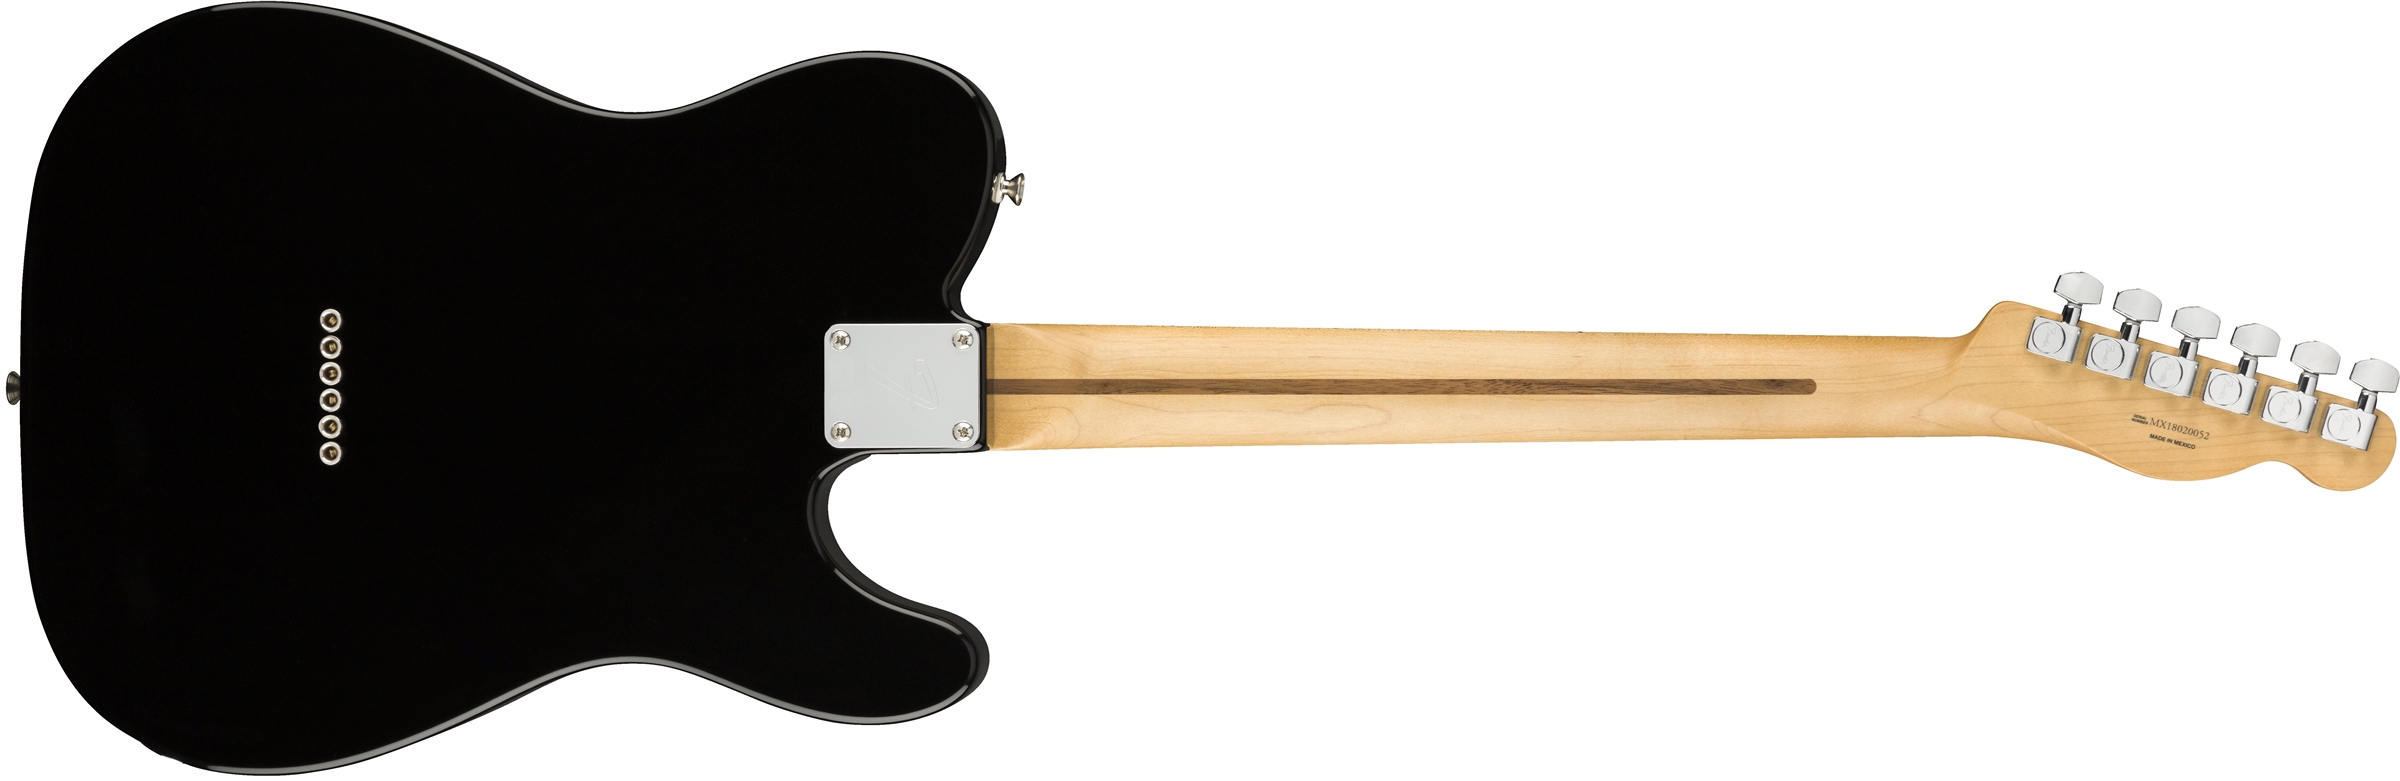 Fender Tele Player Lh Gaucher Mex Ss Mn - Black - Left-handed electric guitar - Variation 1